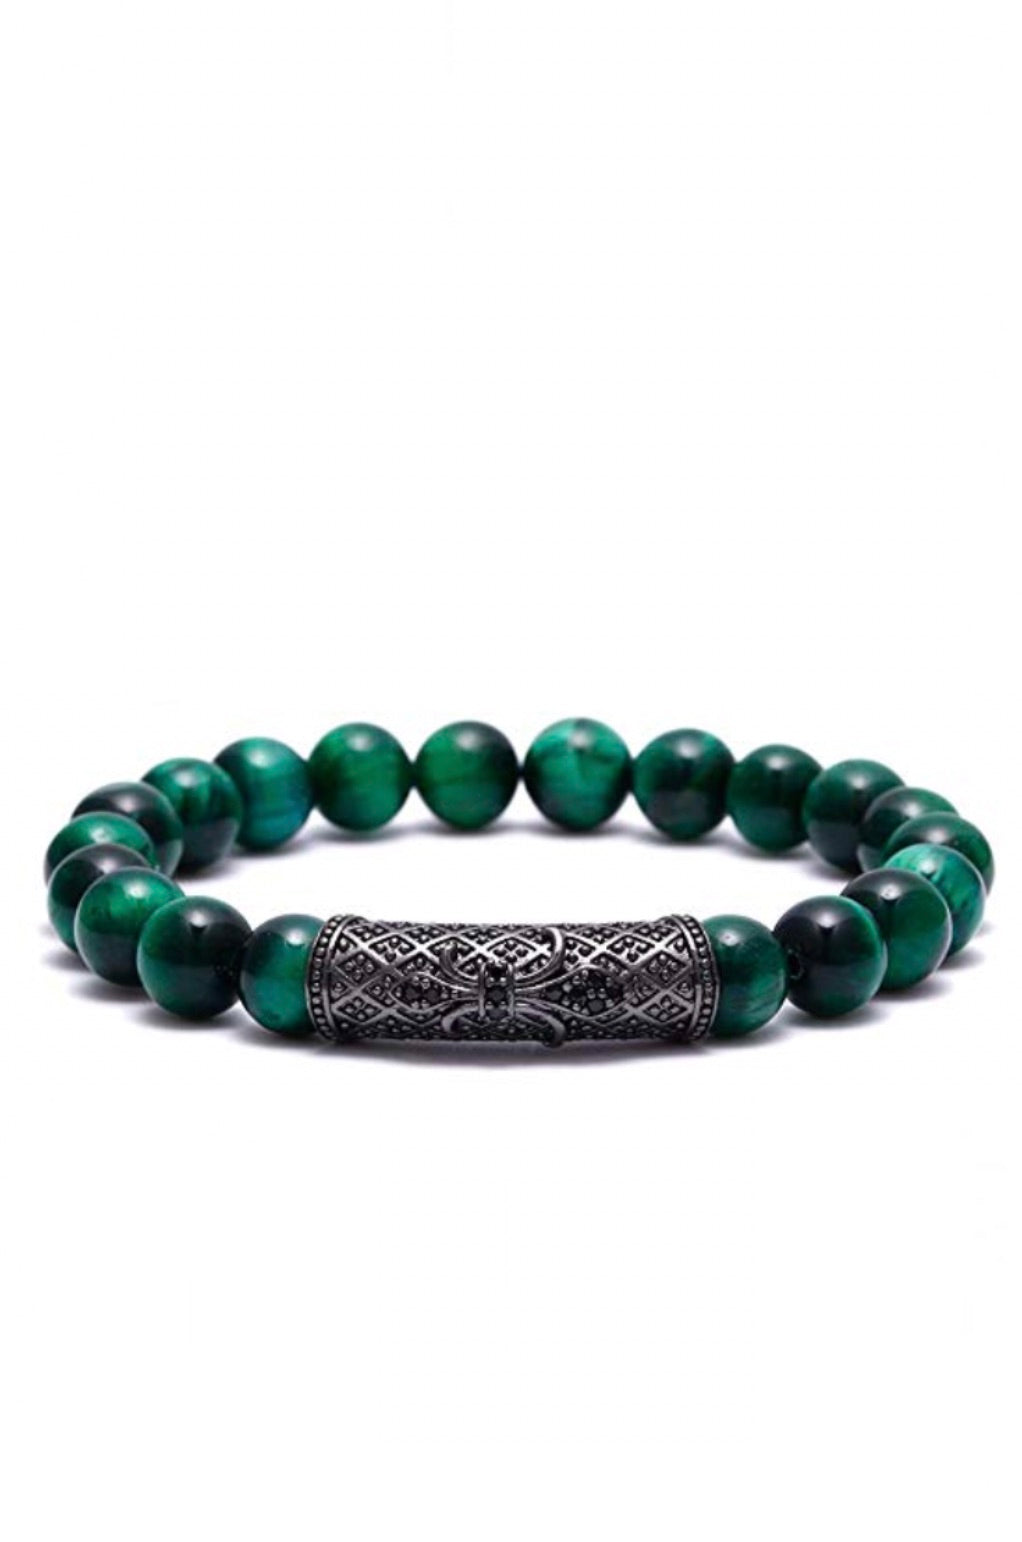 Black Plated & Green Gemstone Bar Cz Bracelet